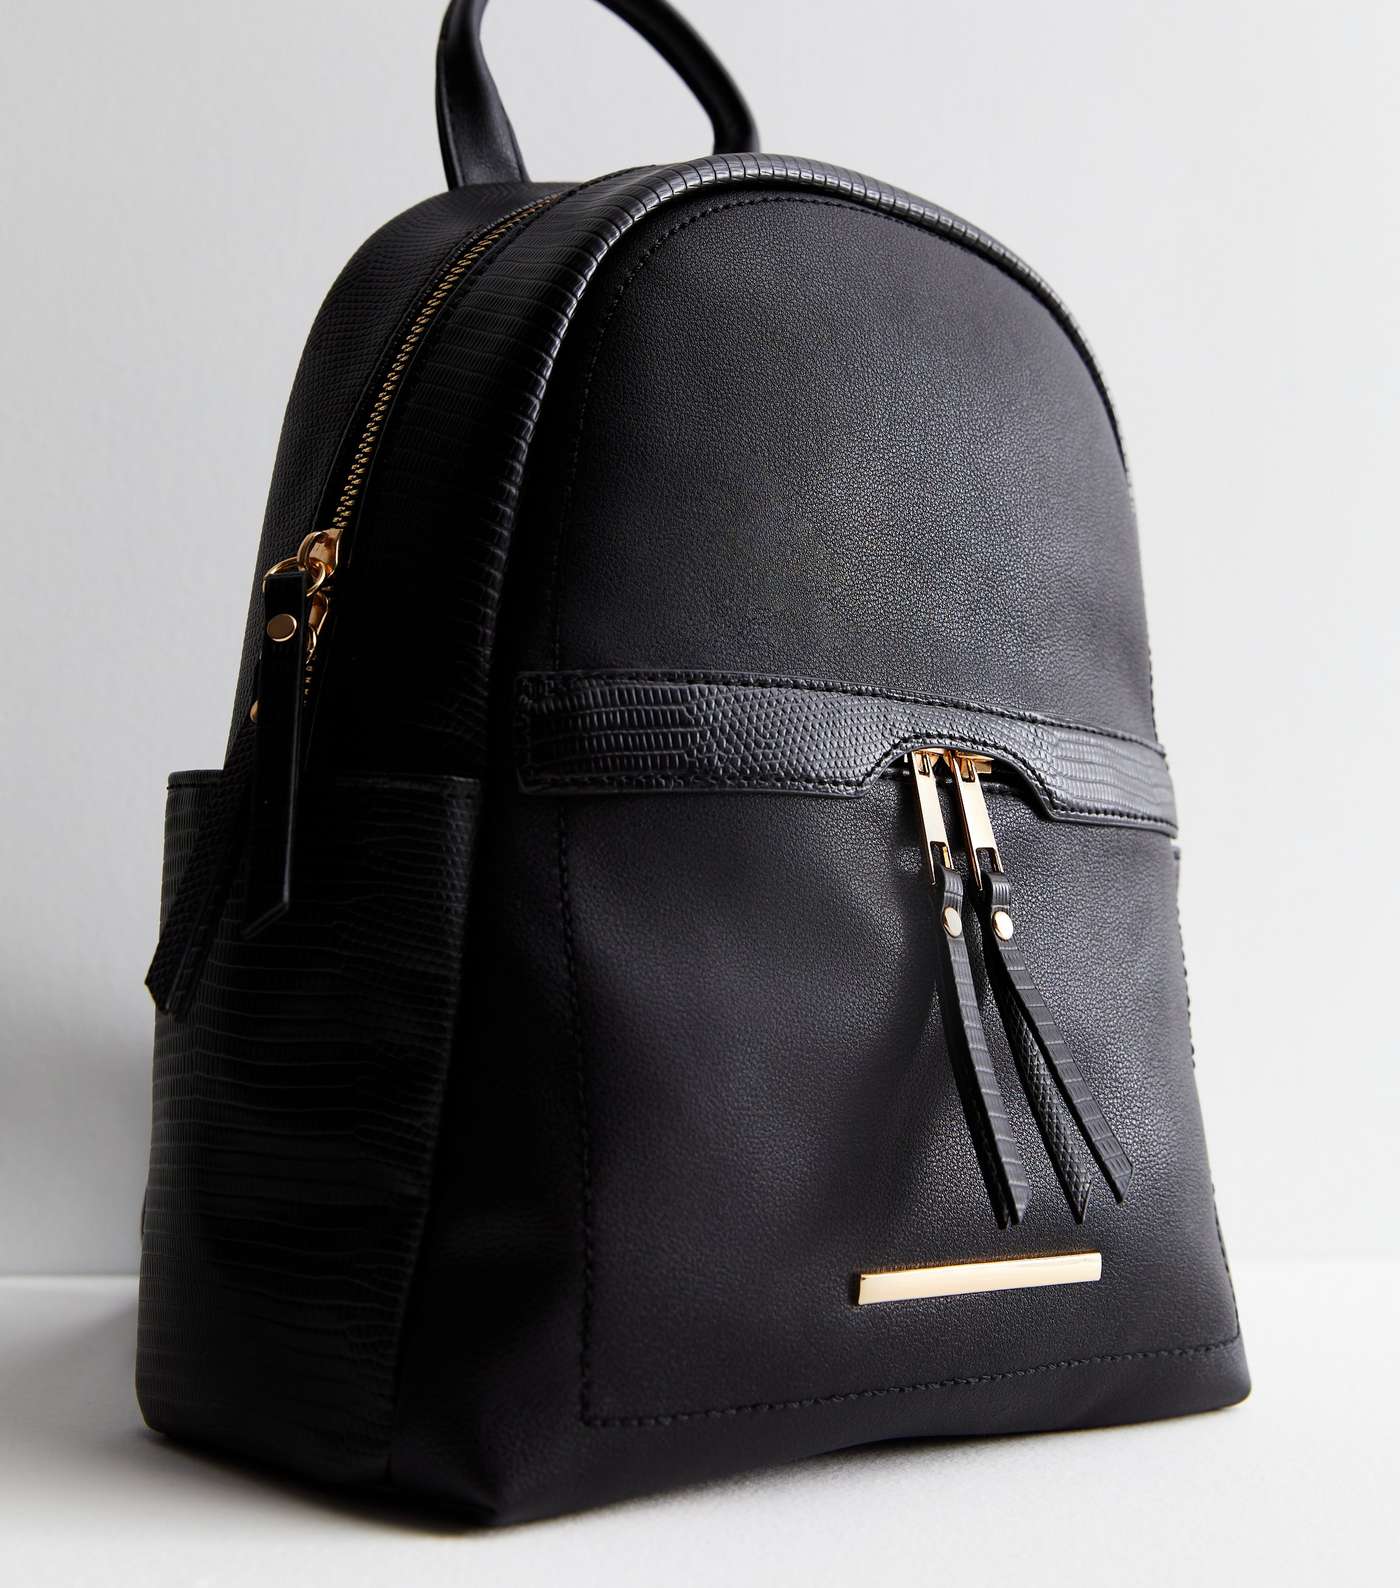 Black Leather-Look Backpack Image 3